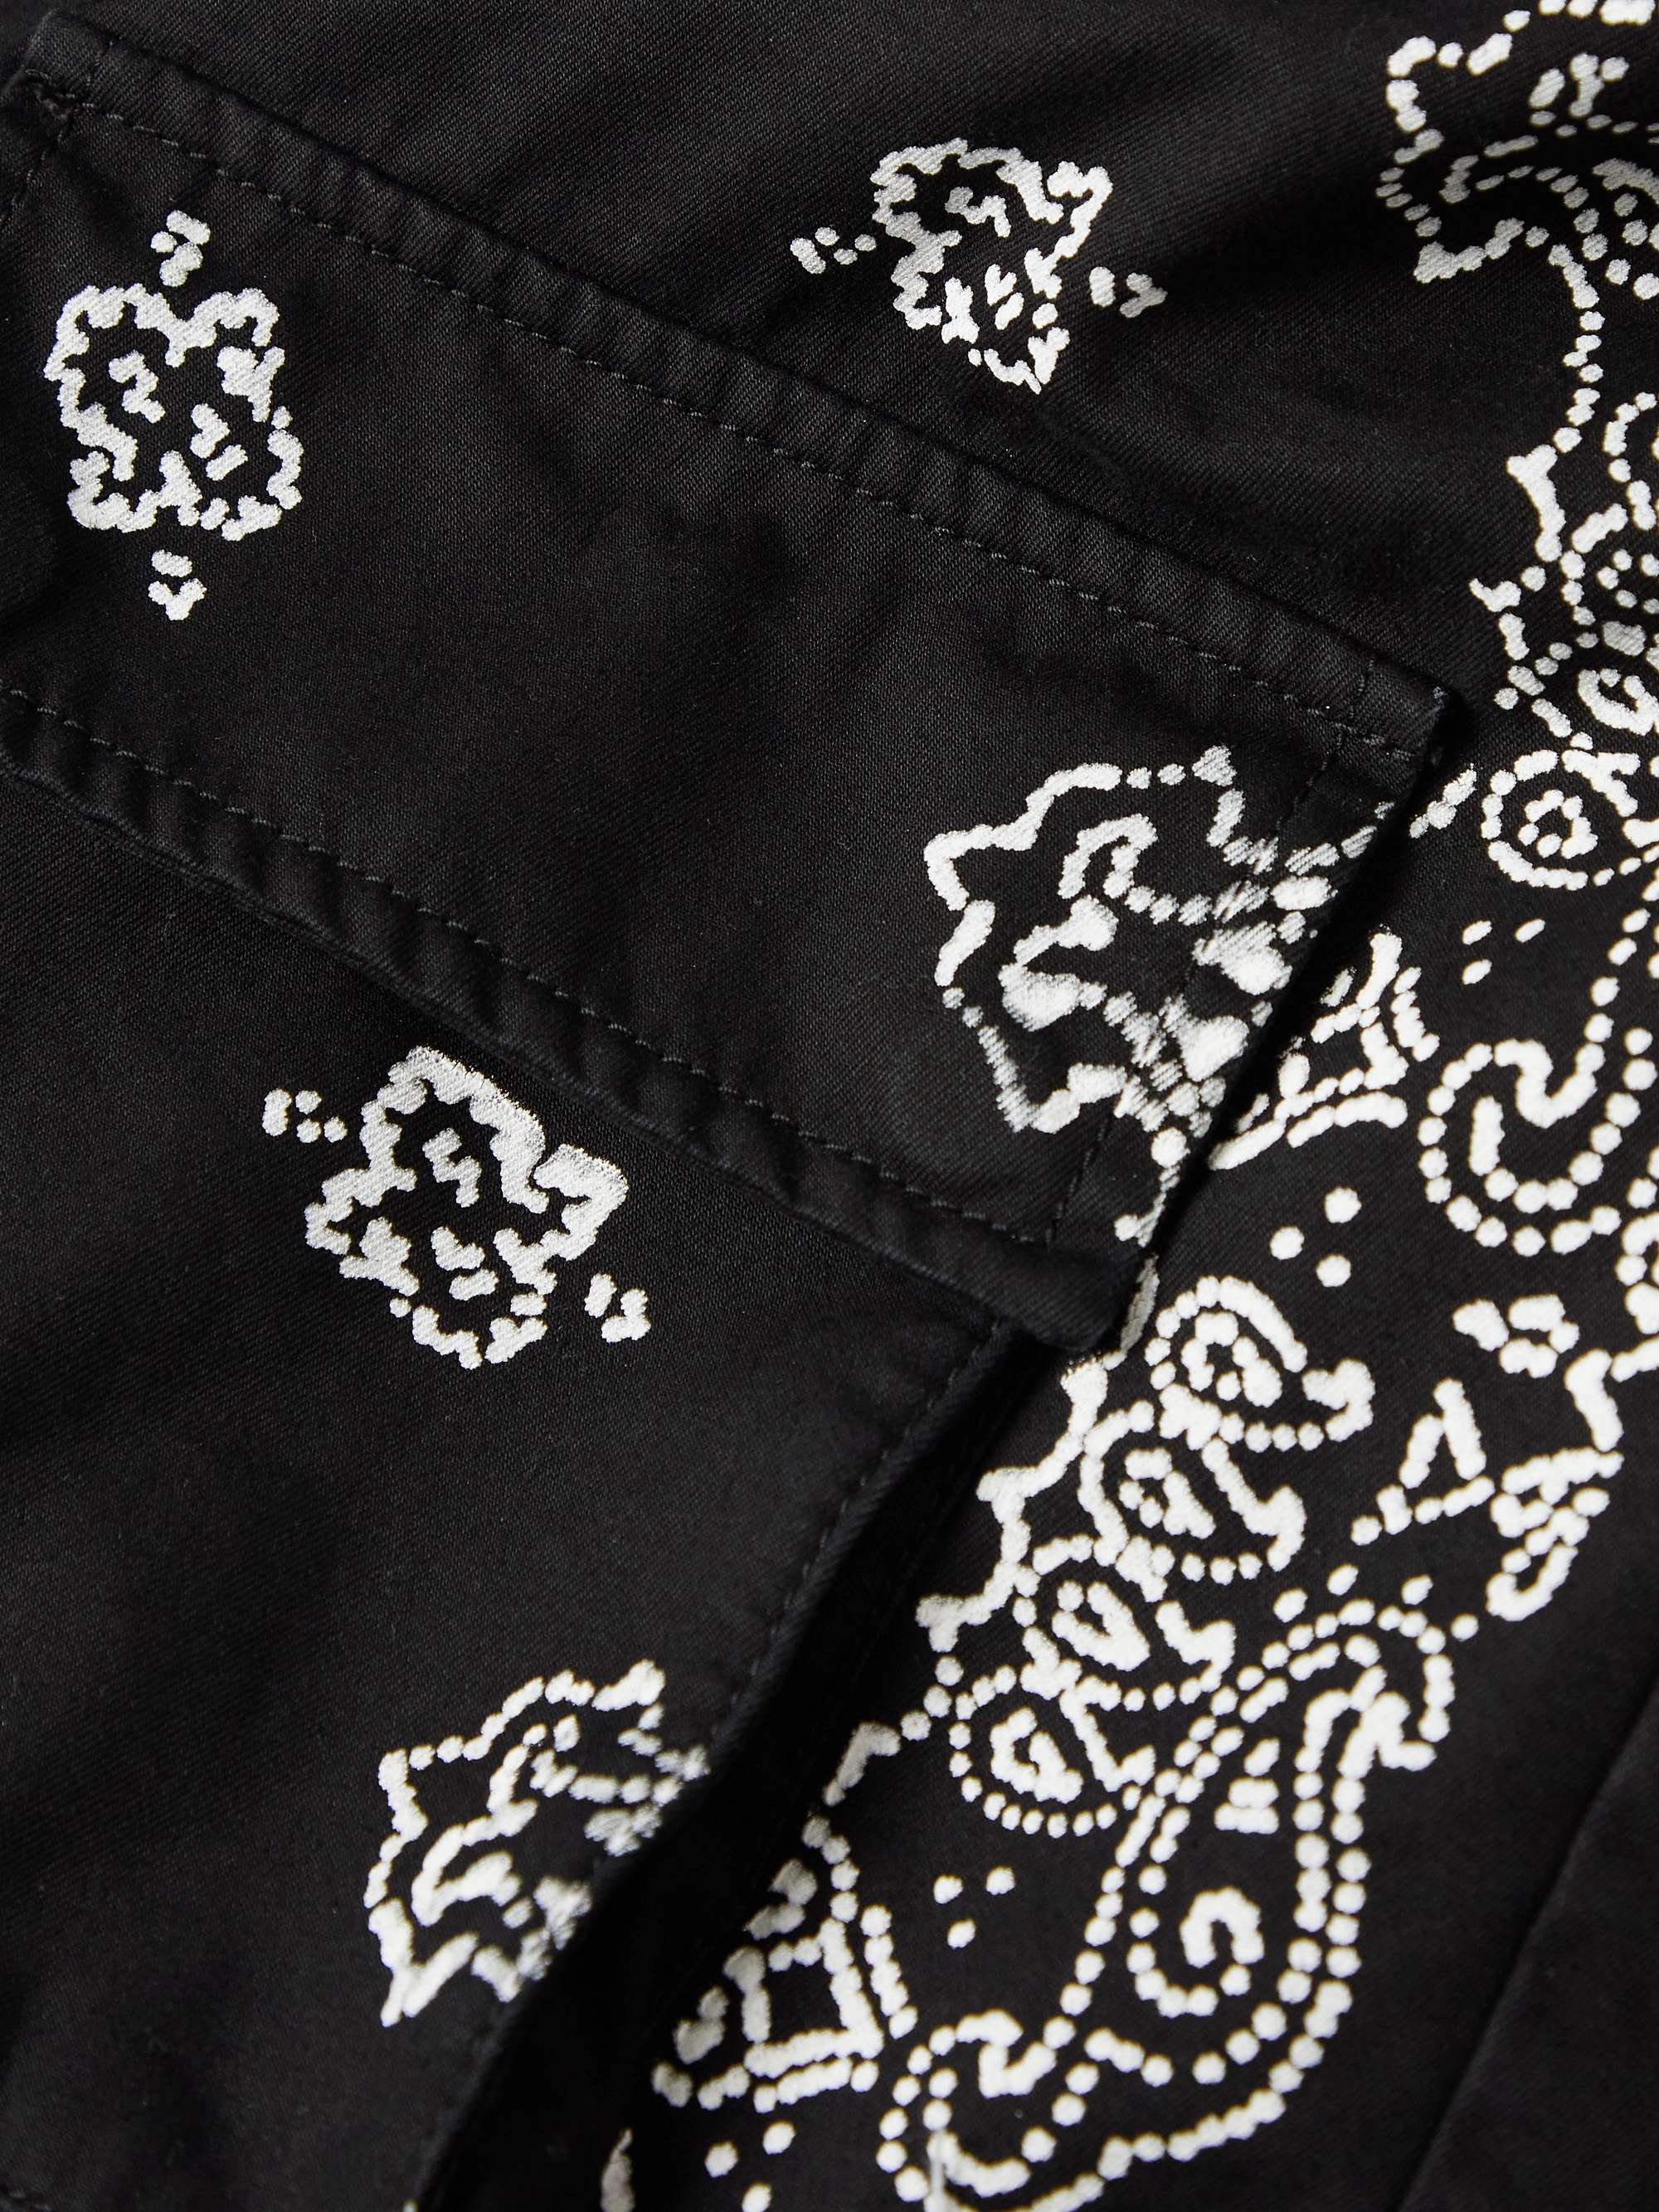 AMIRI M-65 Bleached Bandana-Print Denim Jacket